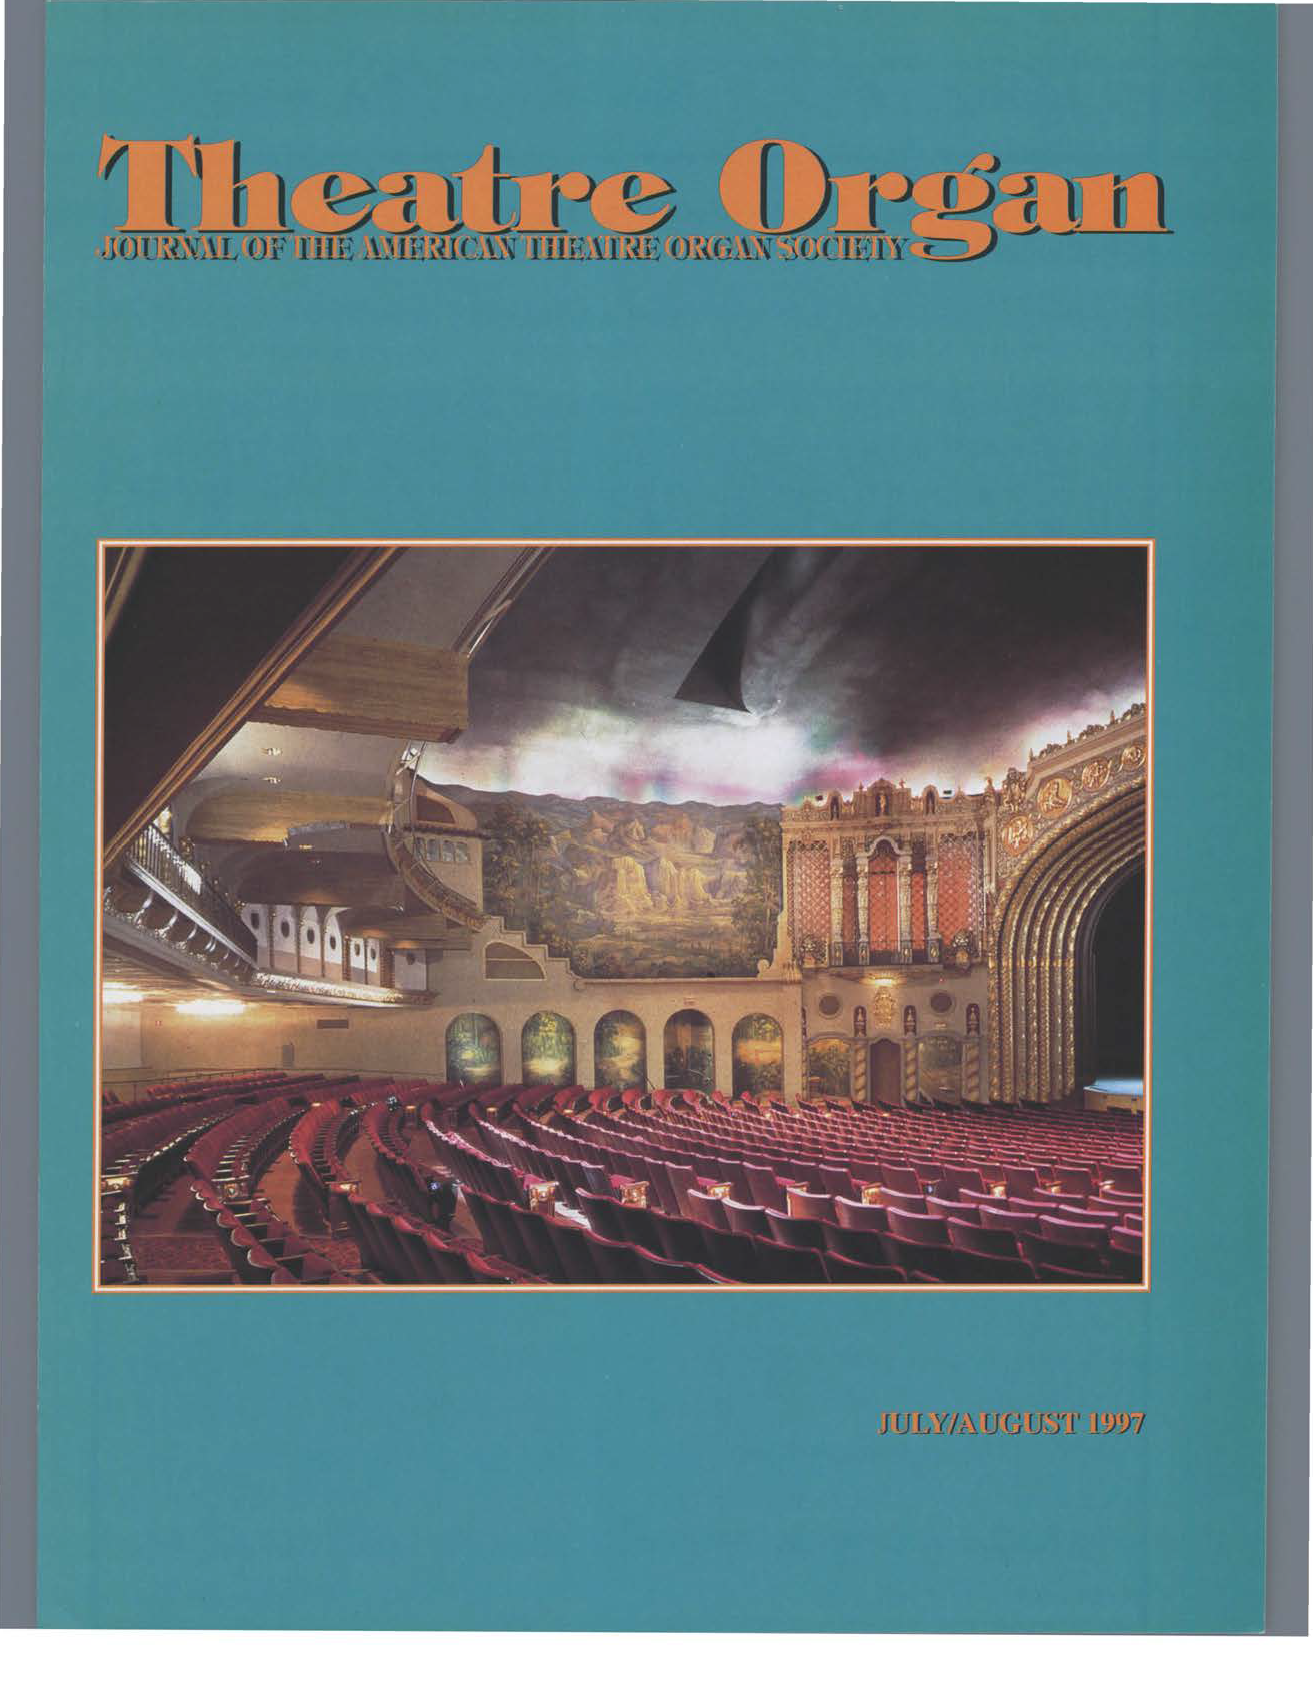 Theatre Organ, July - August 1997, Volume 39, Number 4